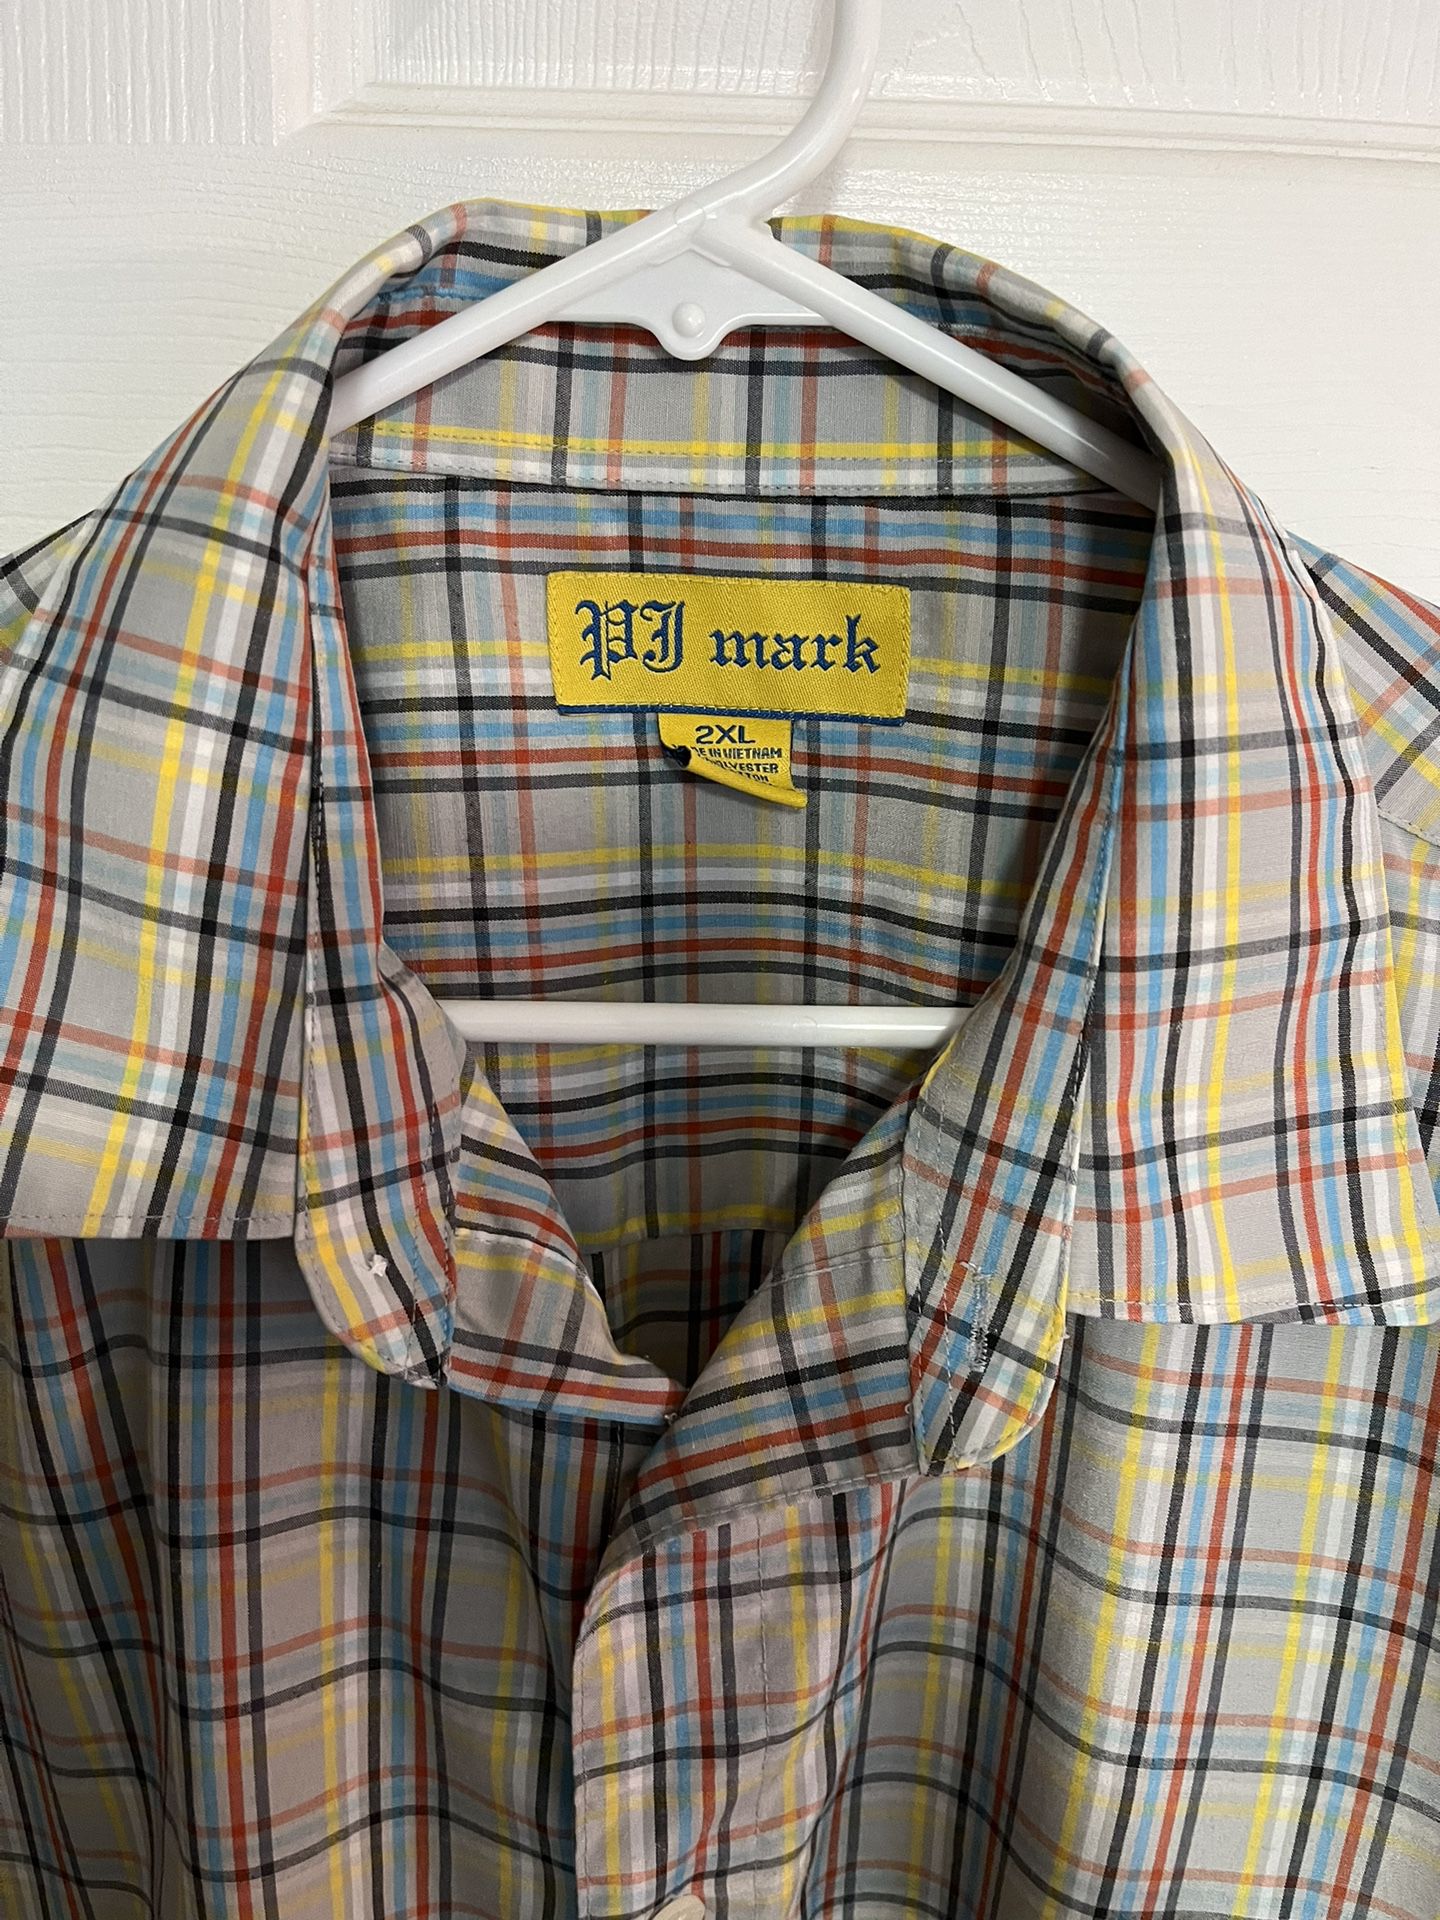 PJ mark men’s short sleeve button down shirt size 2XL gray plaid print 